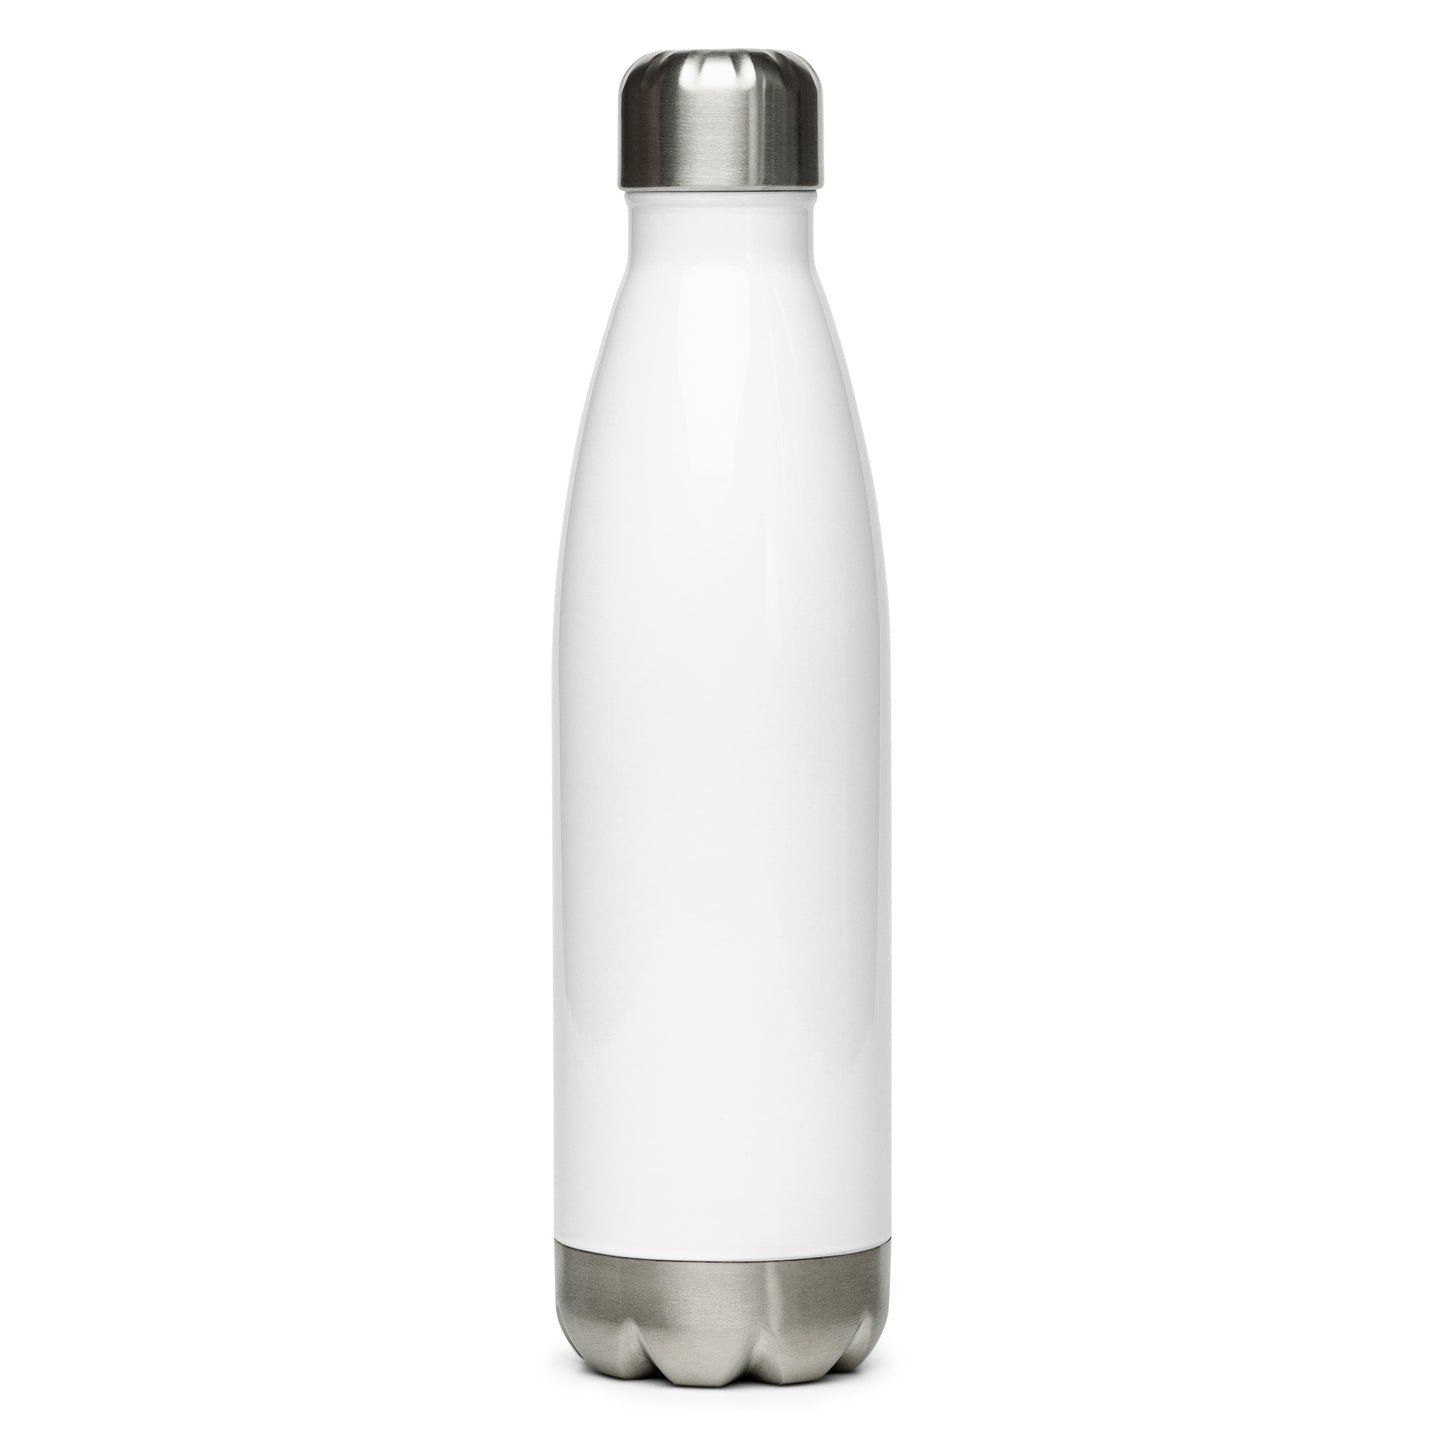 Kenough Stainless steel water bottle